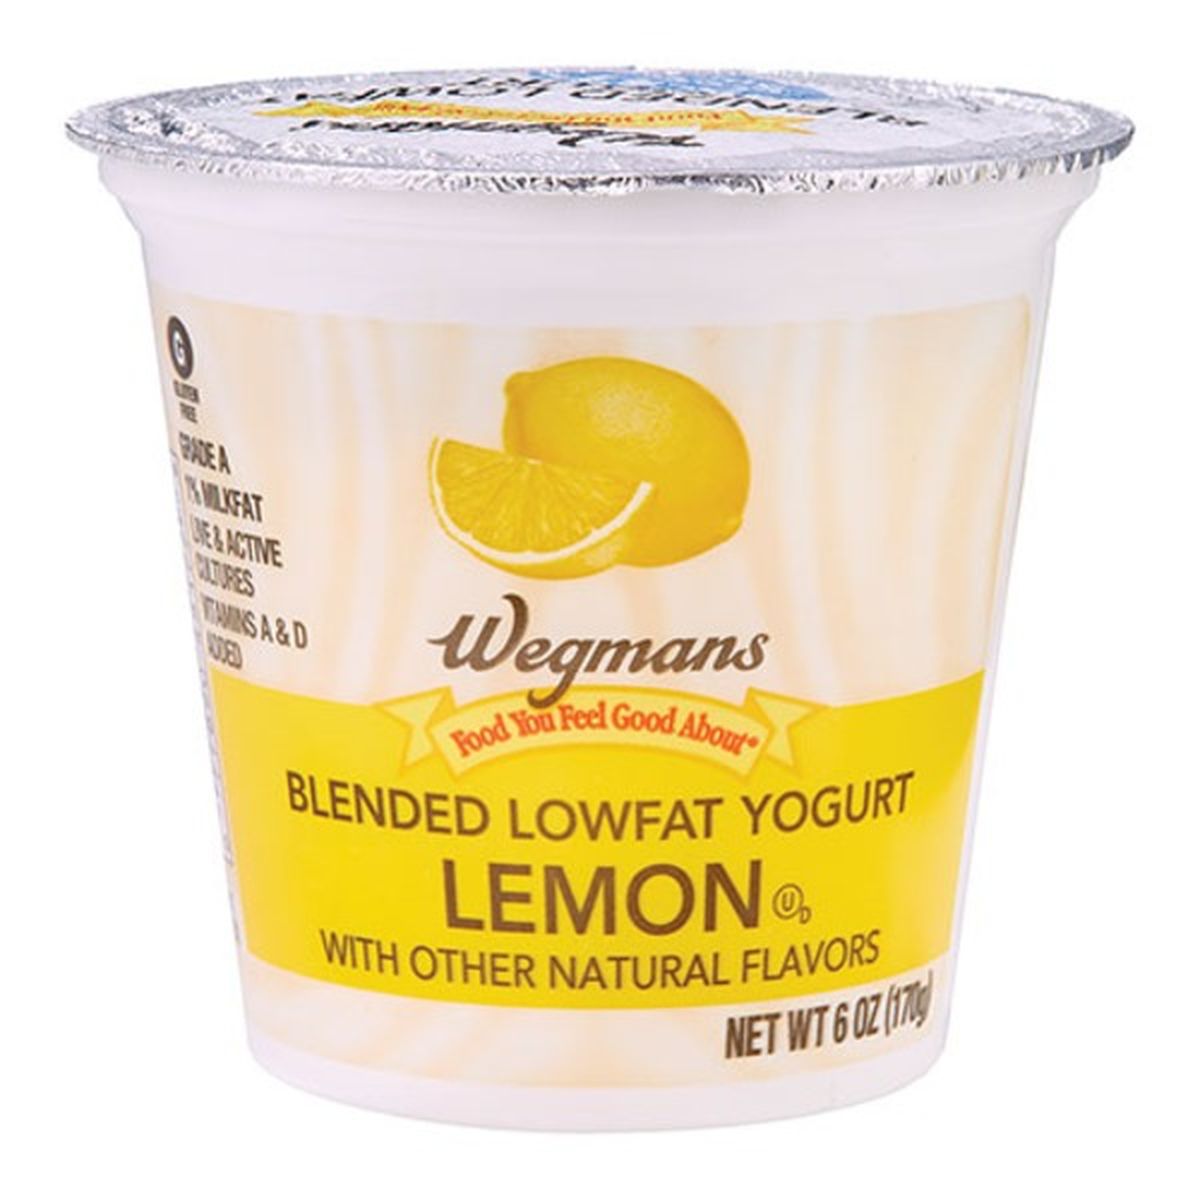 Calories in Wegmans Lowfat Blended Lemon Yogurt